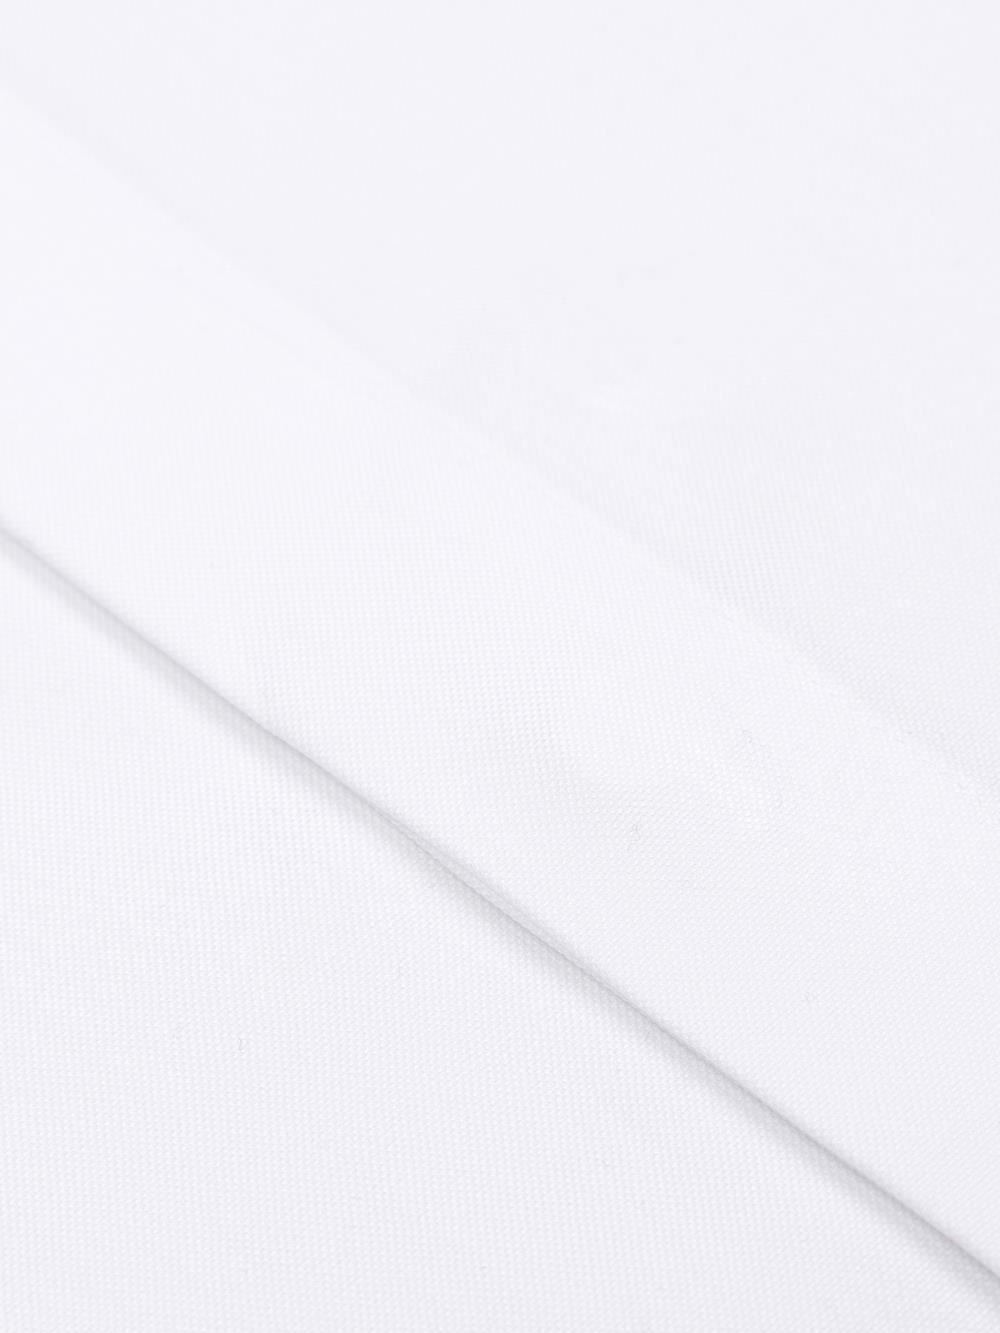 Camicia slim fit a punta bianca - Abbottonatura Nascosta - Abbottonatura nascosta